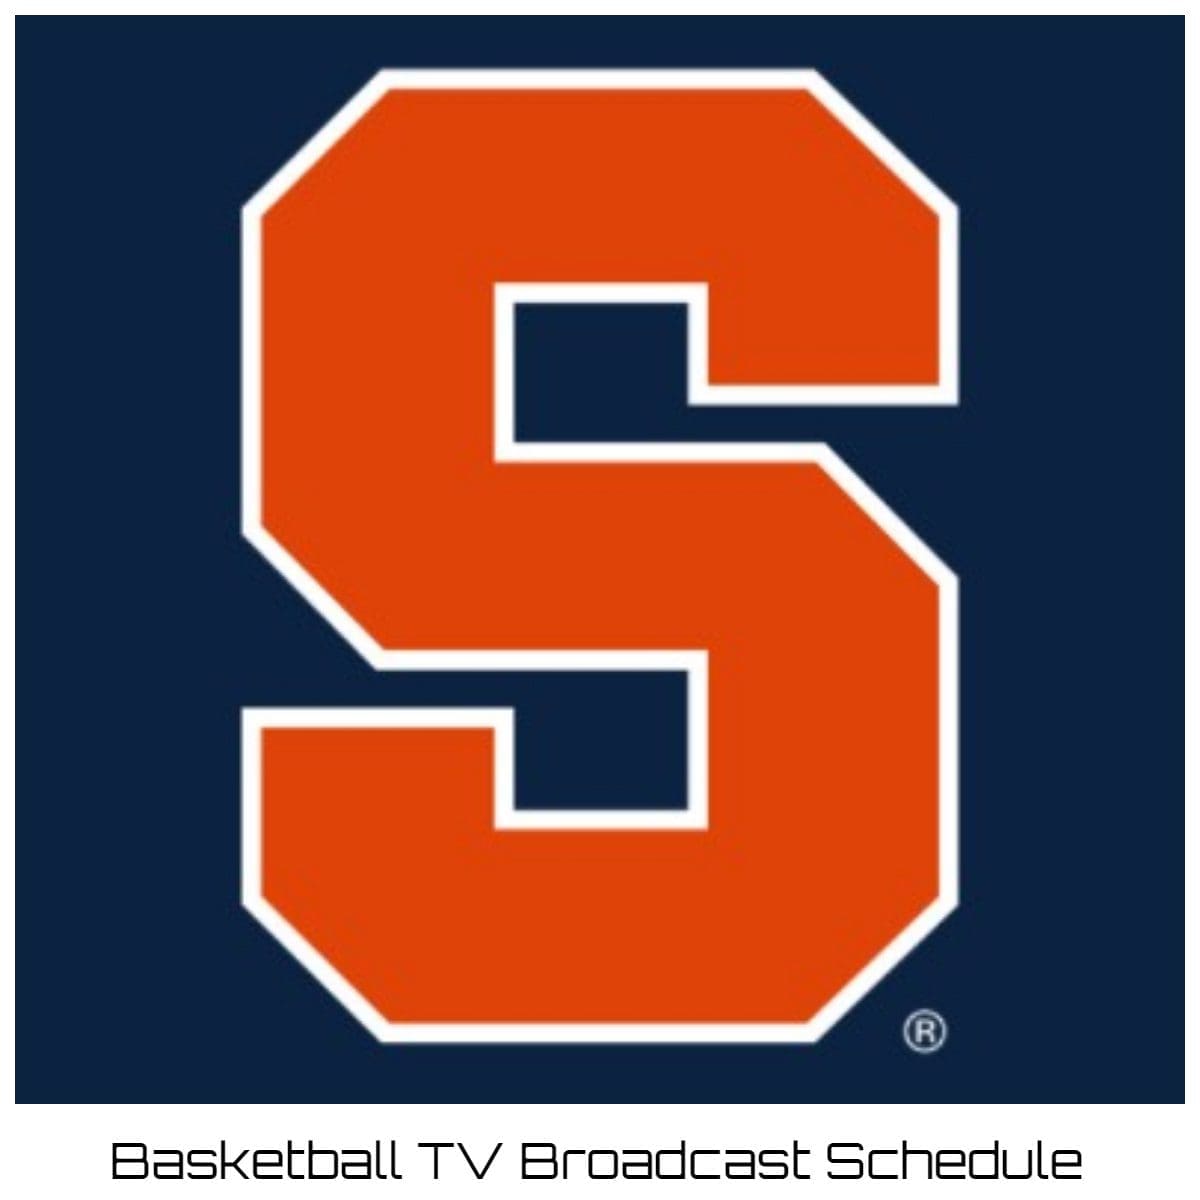 Syracuse Orange Basketball TV Broadcast Schedule